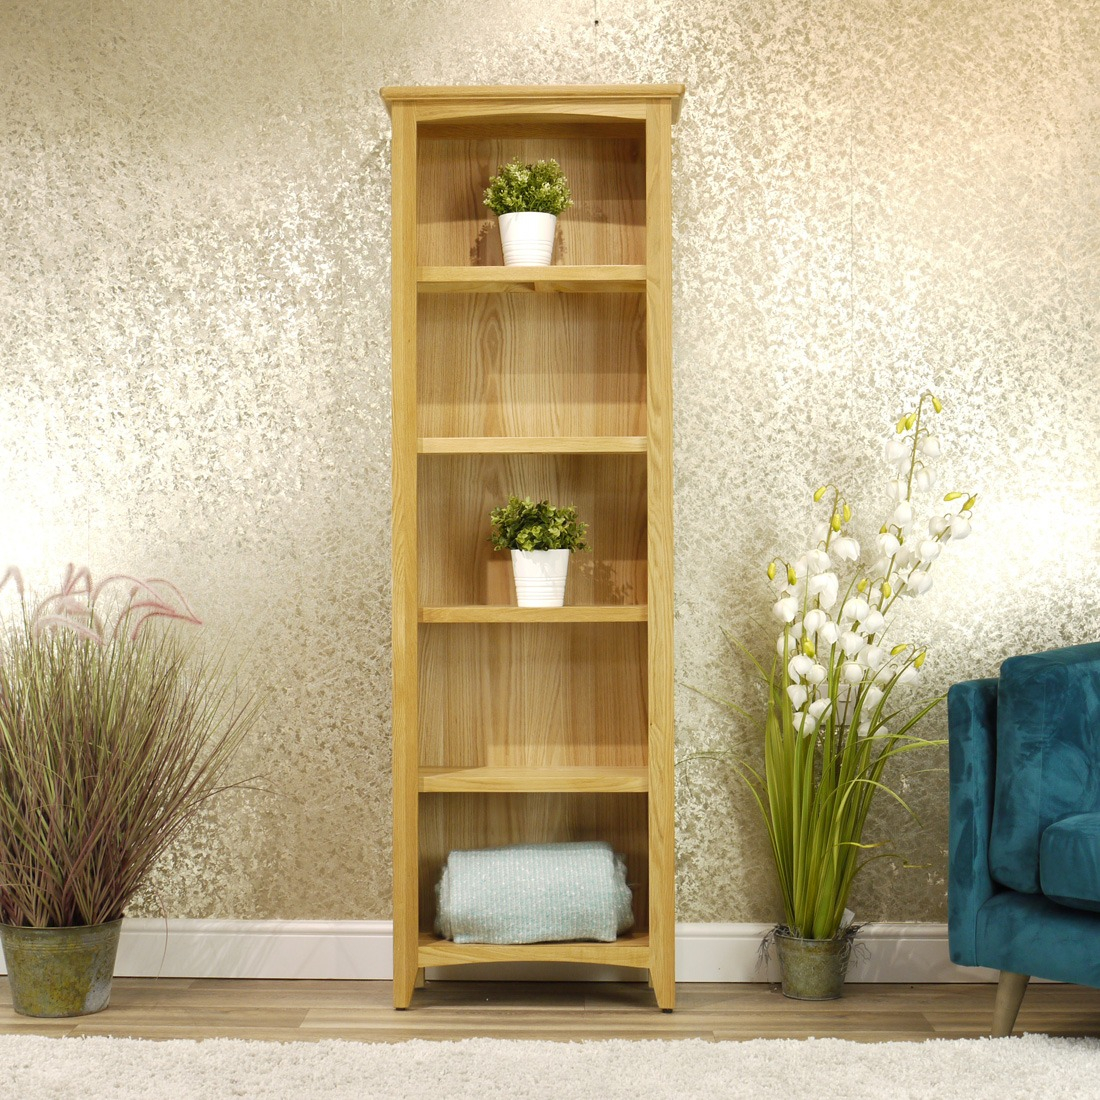 Details About Oakland Modern Oak Bookcase Tall Narrow Bookshelf Light Wood Tone throughout sizing 1100 X 1100